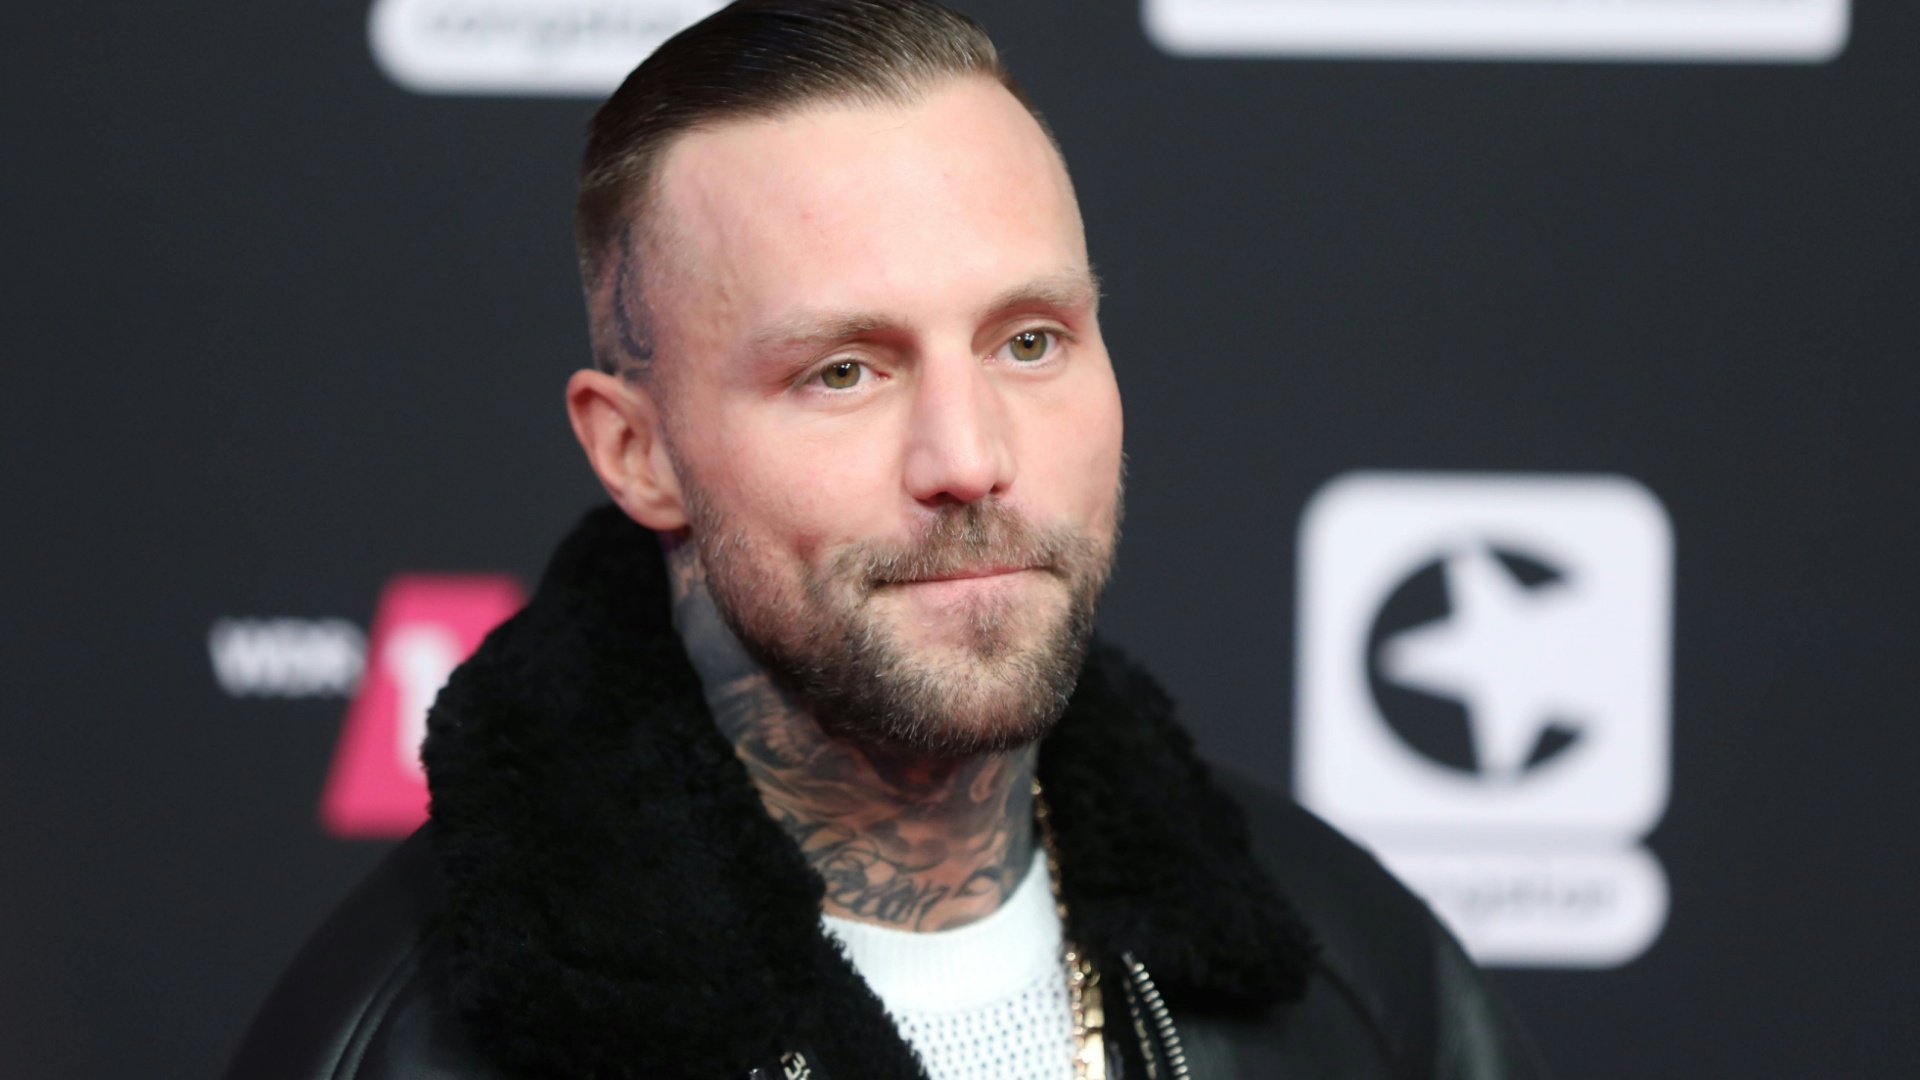 "Erfolg ist kein Glück": Rapper Kontra K besucht DFB-Team